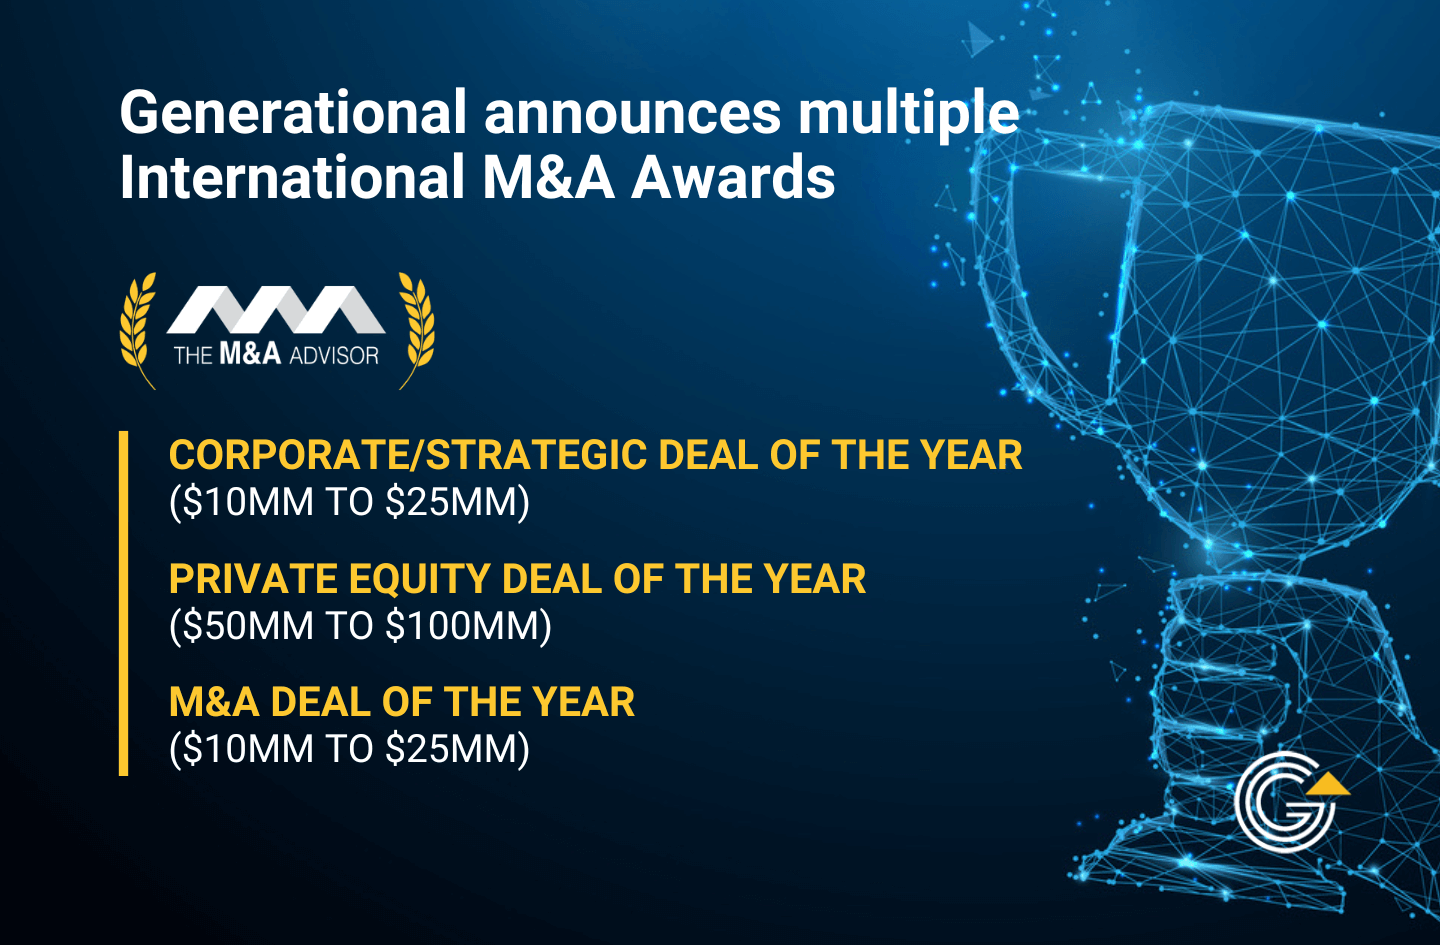 Generational Group Wins Multiple International M&A Awards